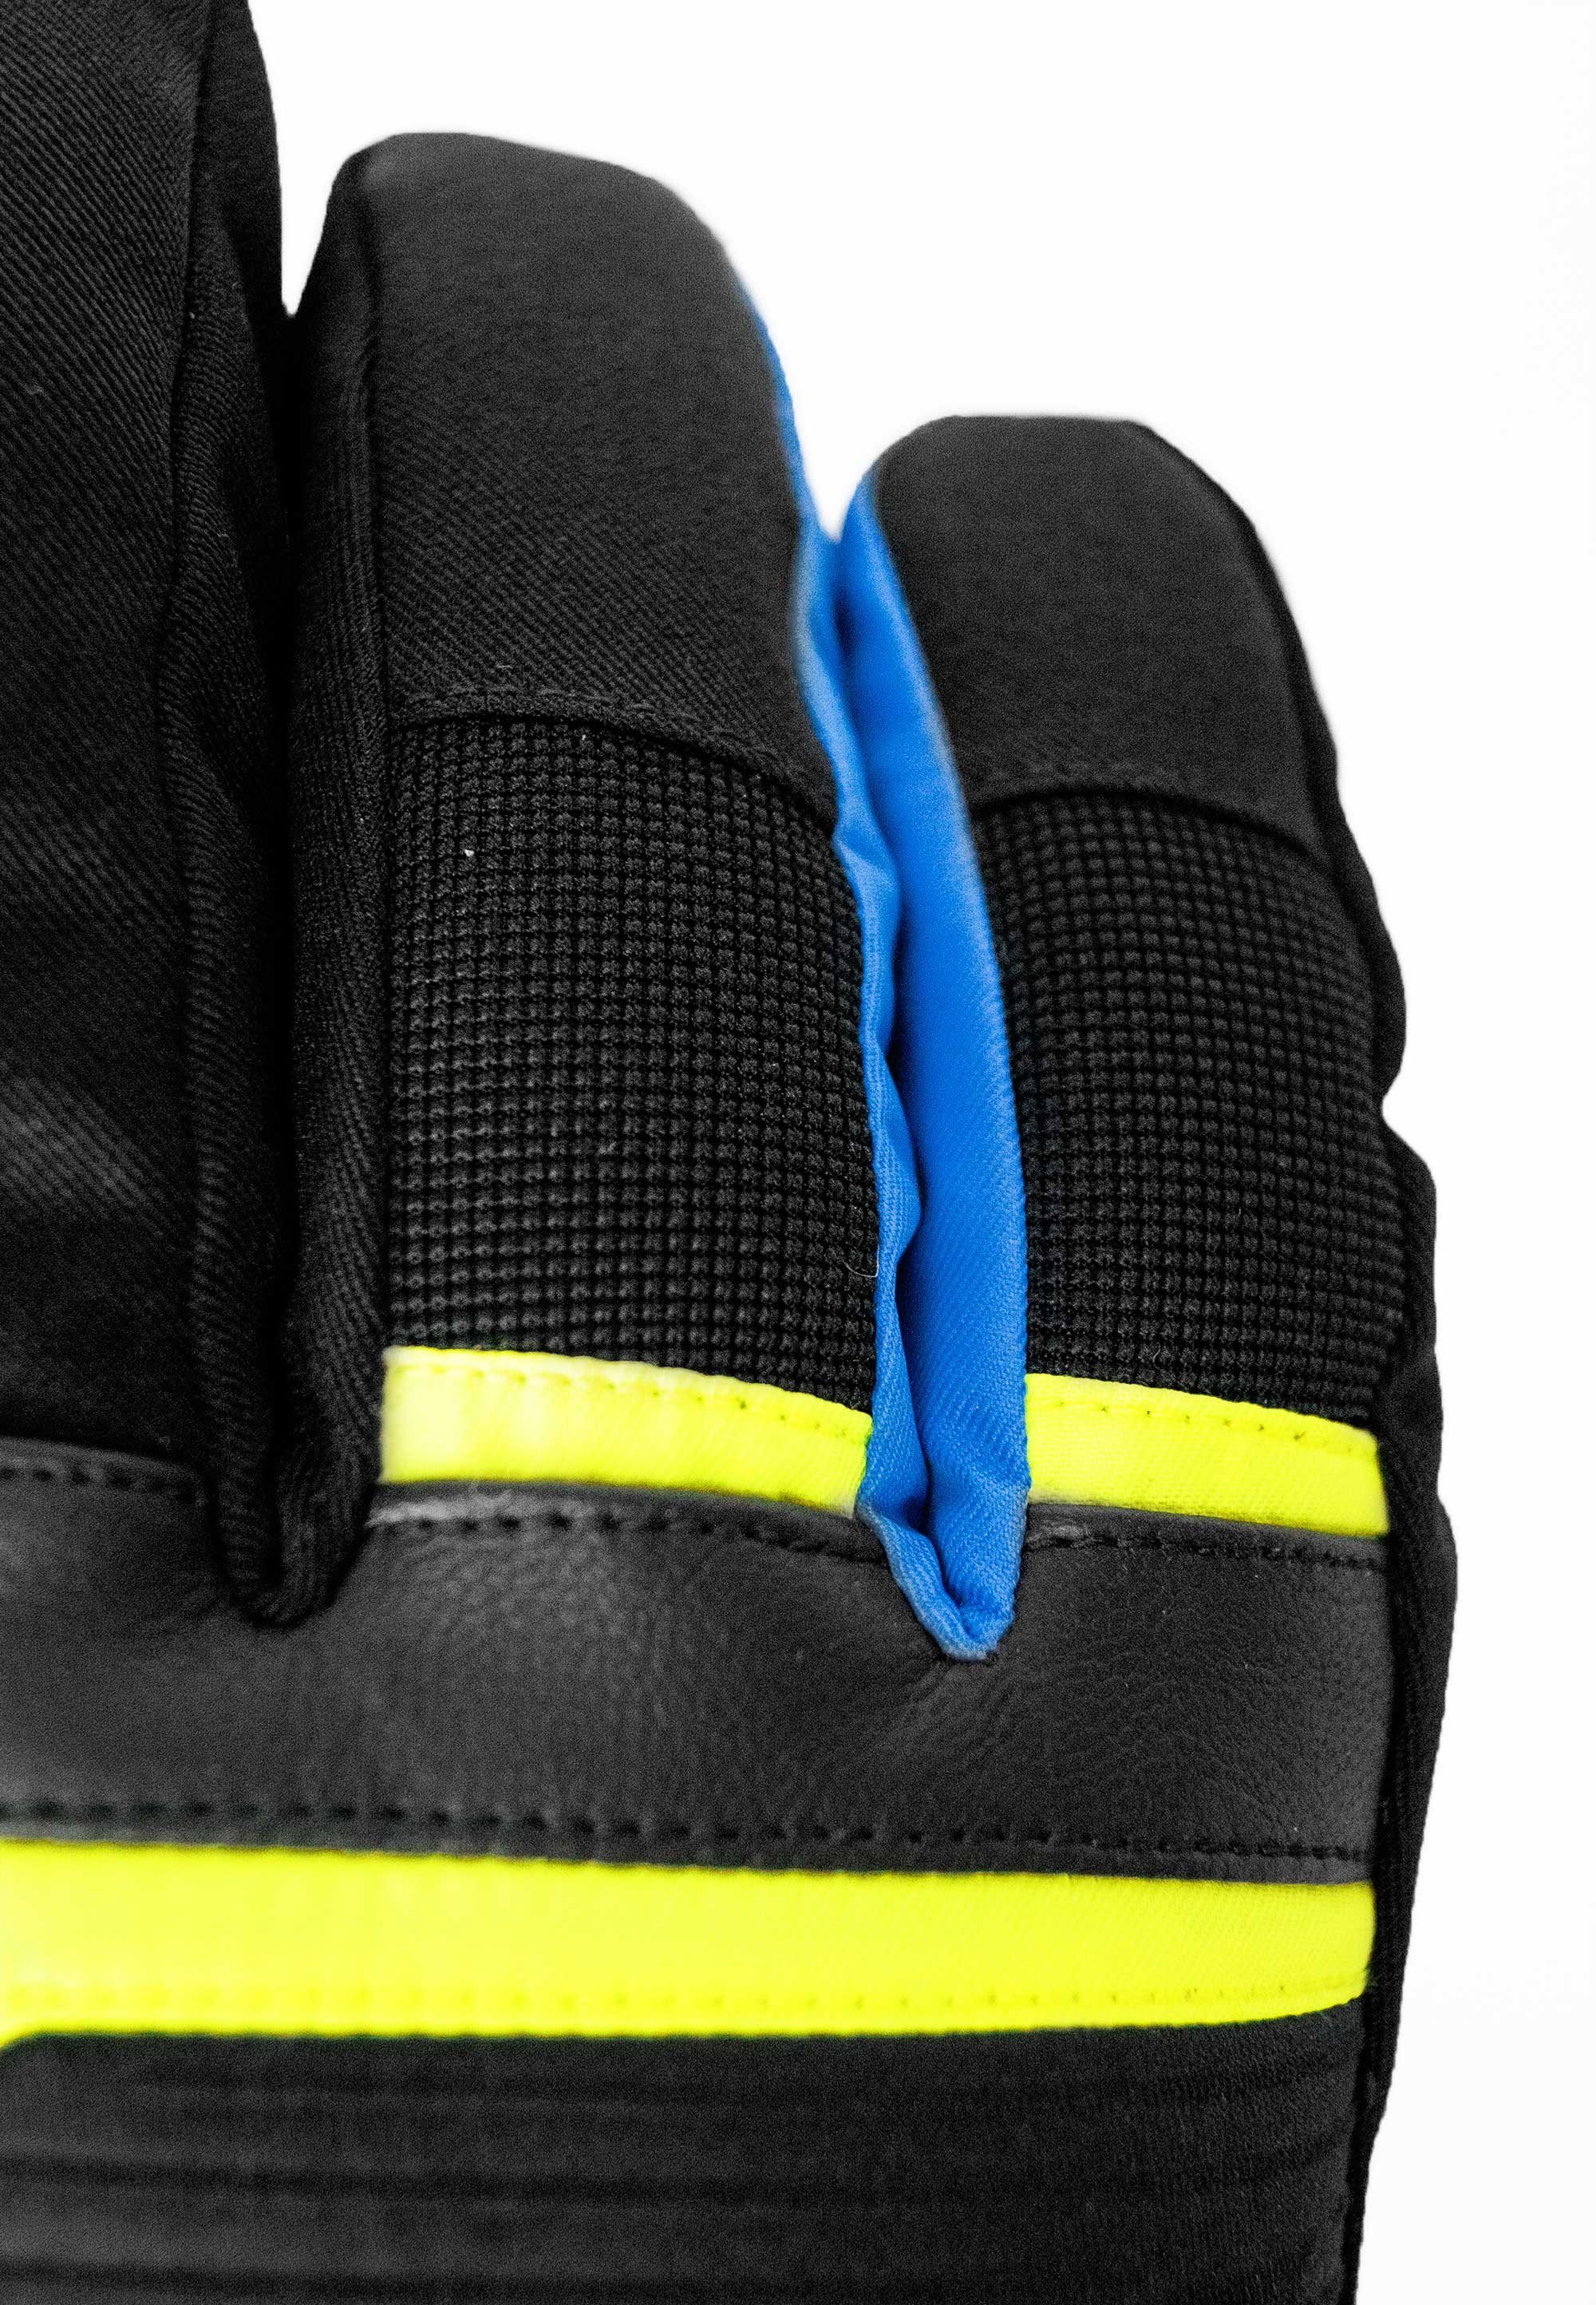 Reusch Skihandschuhe Venom aus wasserdichtem atmungsaktivem XT schwarz-blau R-TEX® Material und